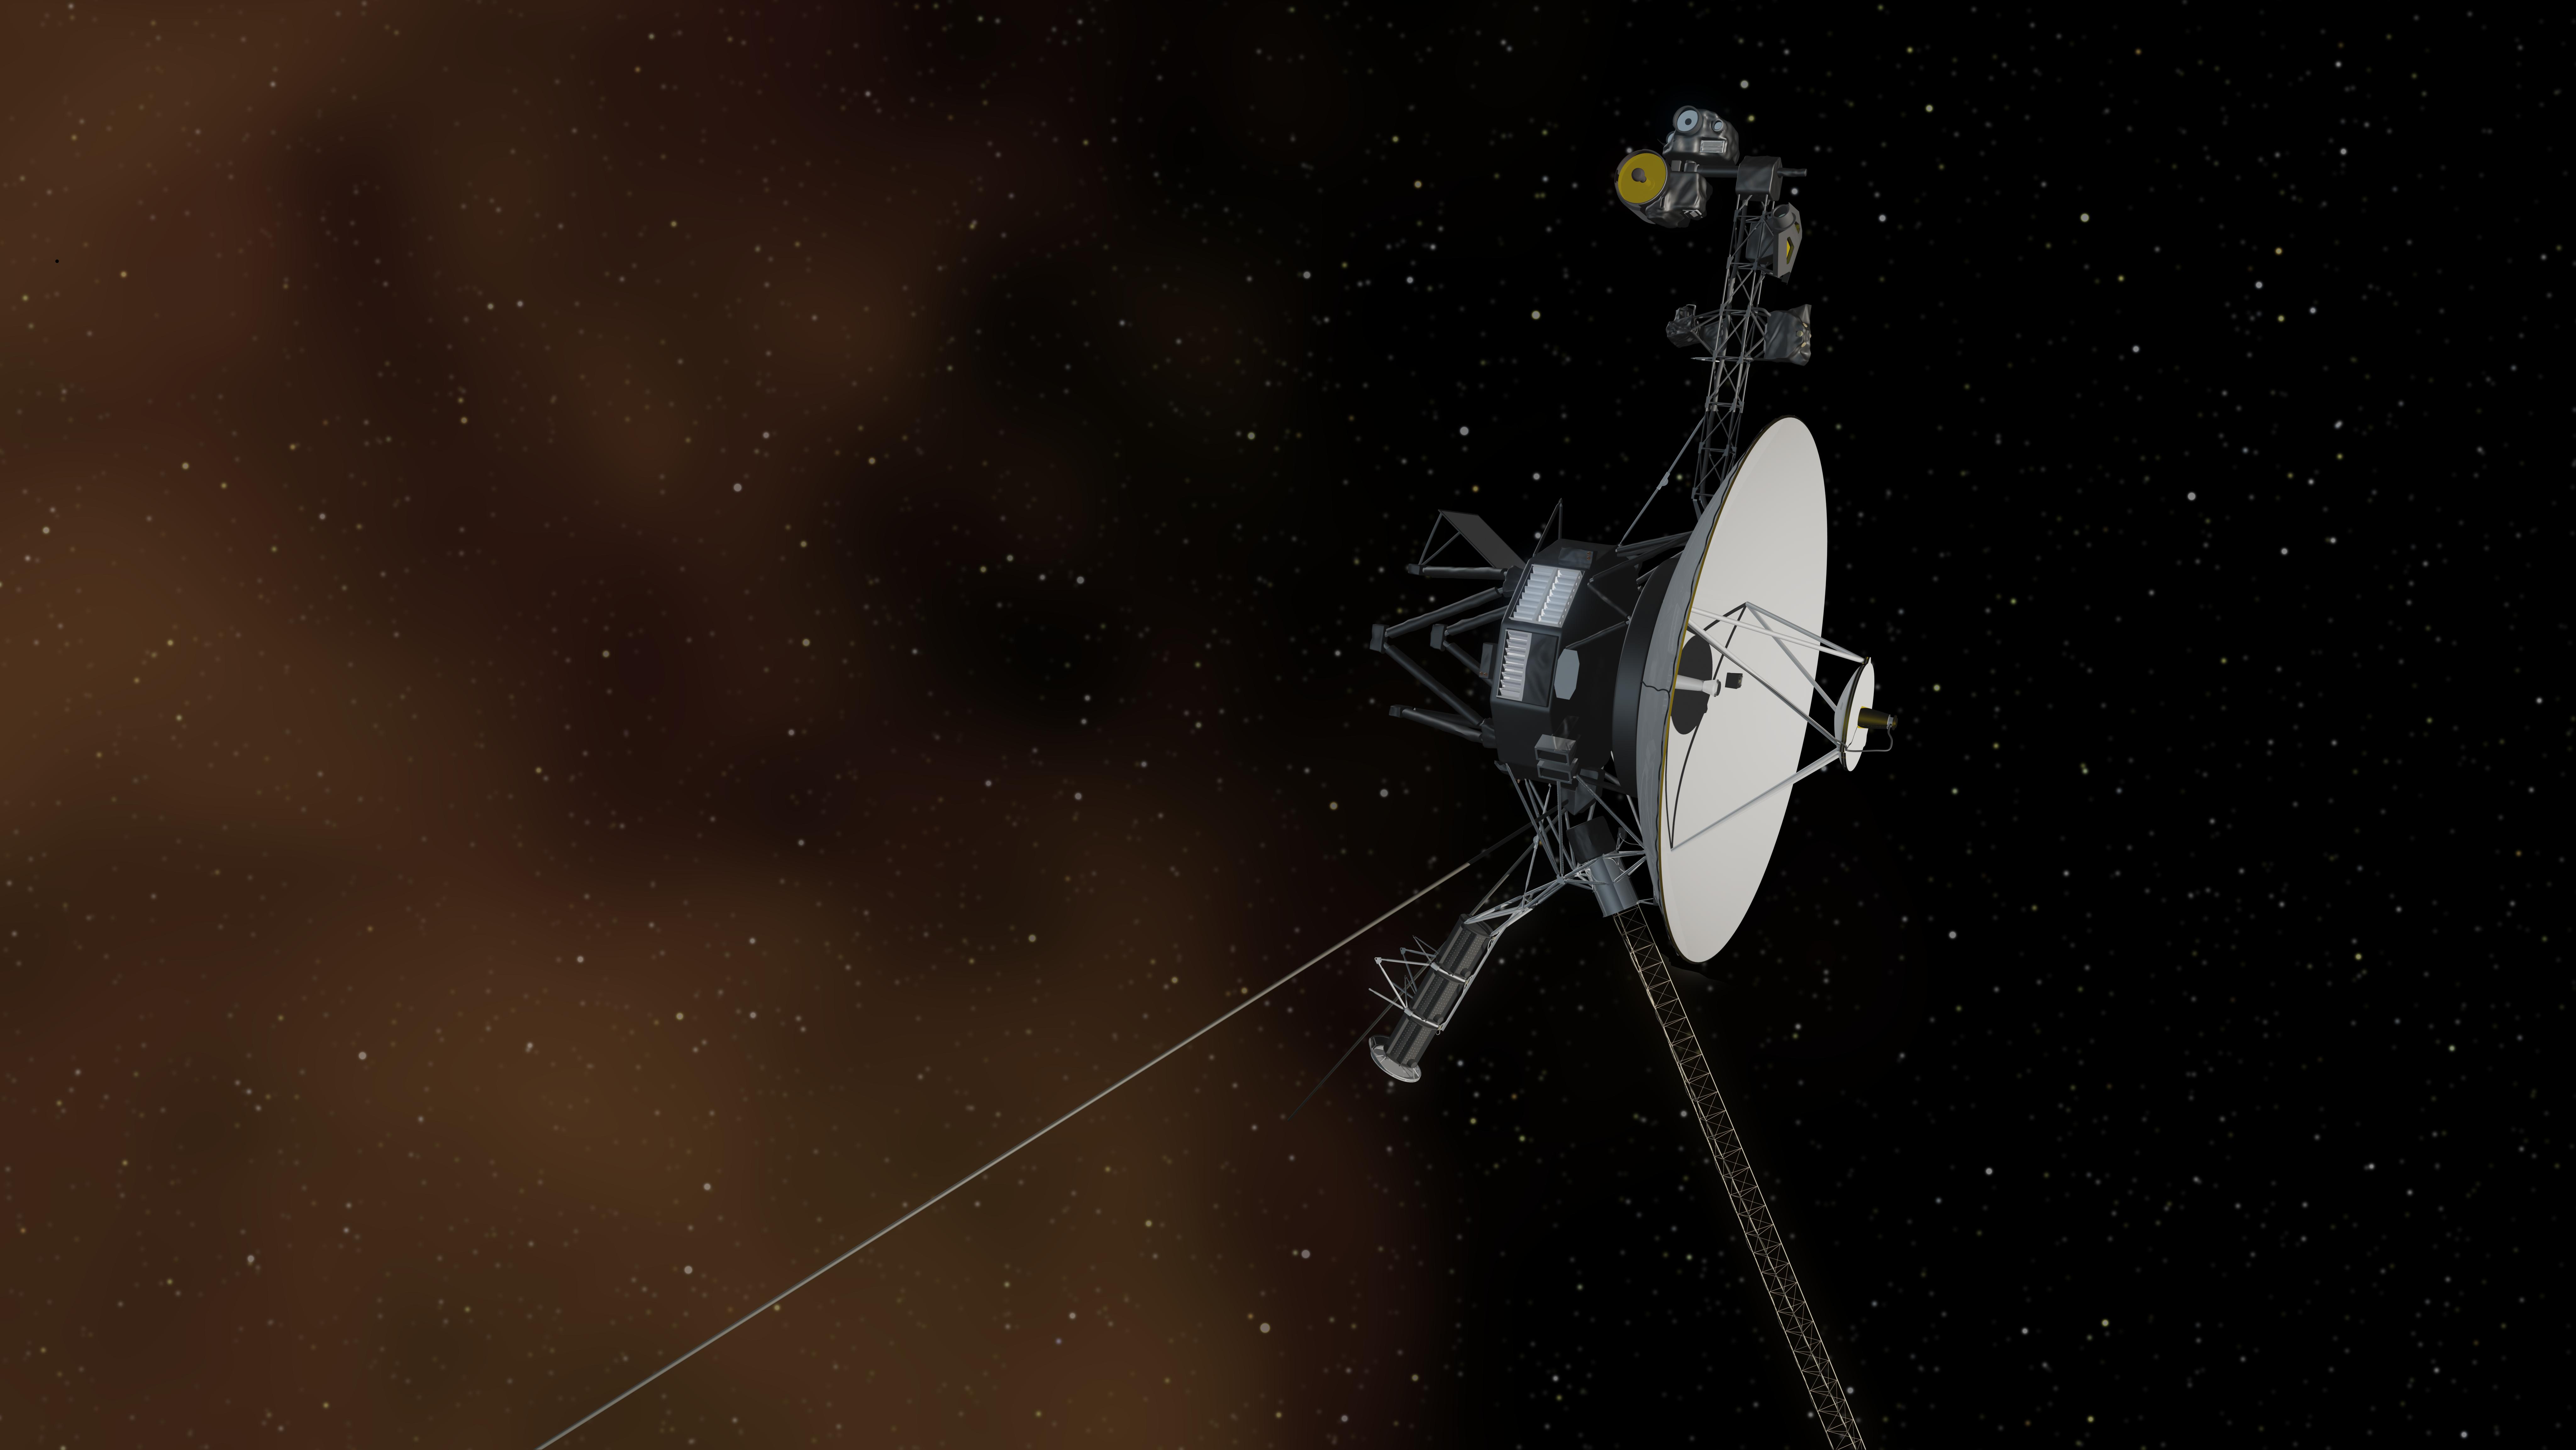 Space Image Voyager Entering Interstellar Artist Concept